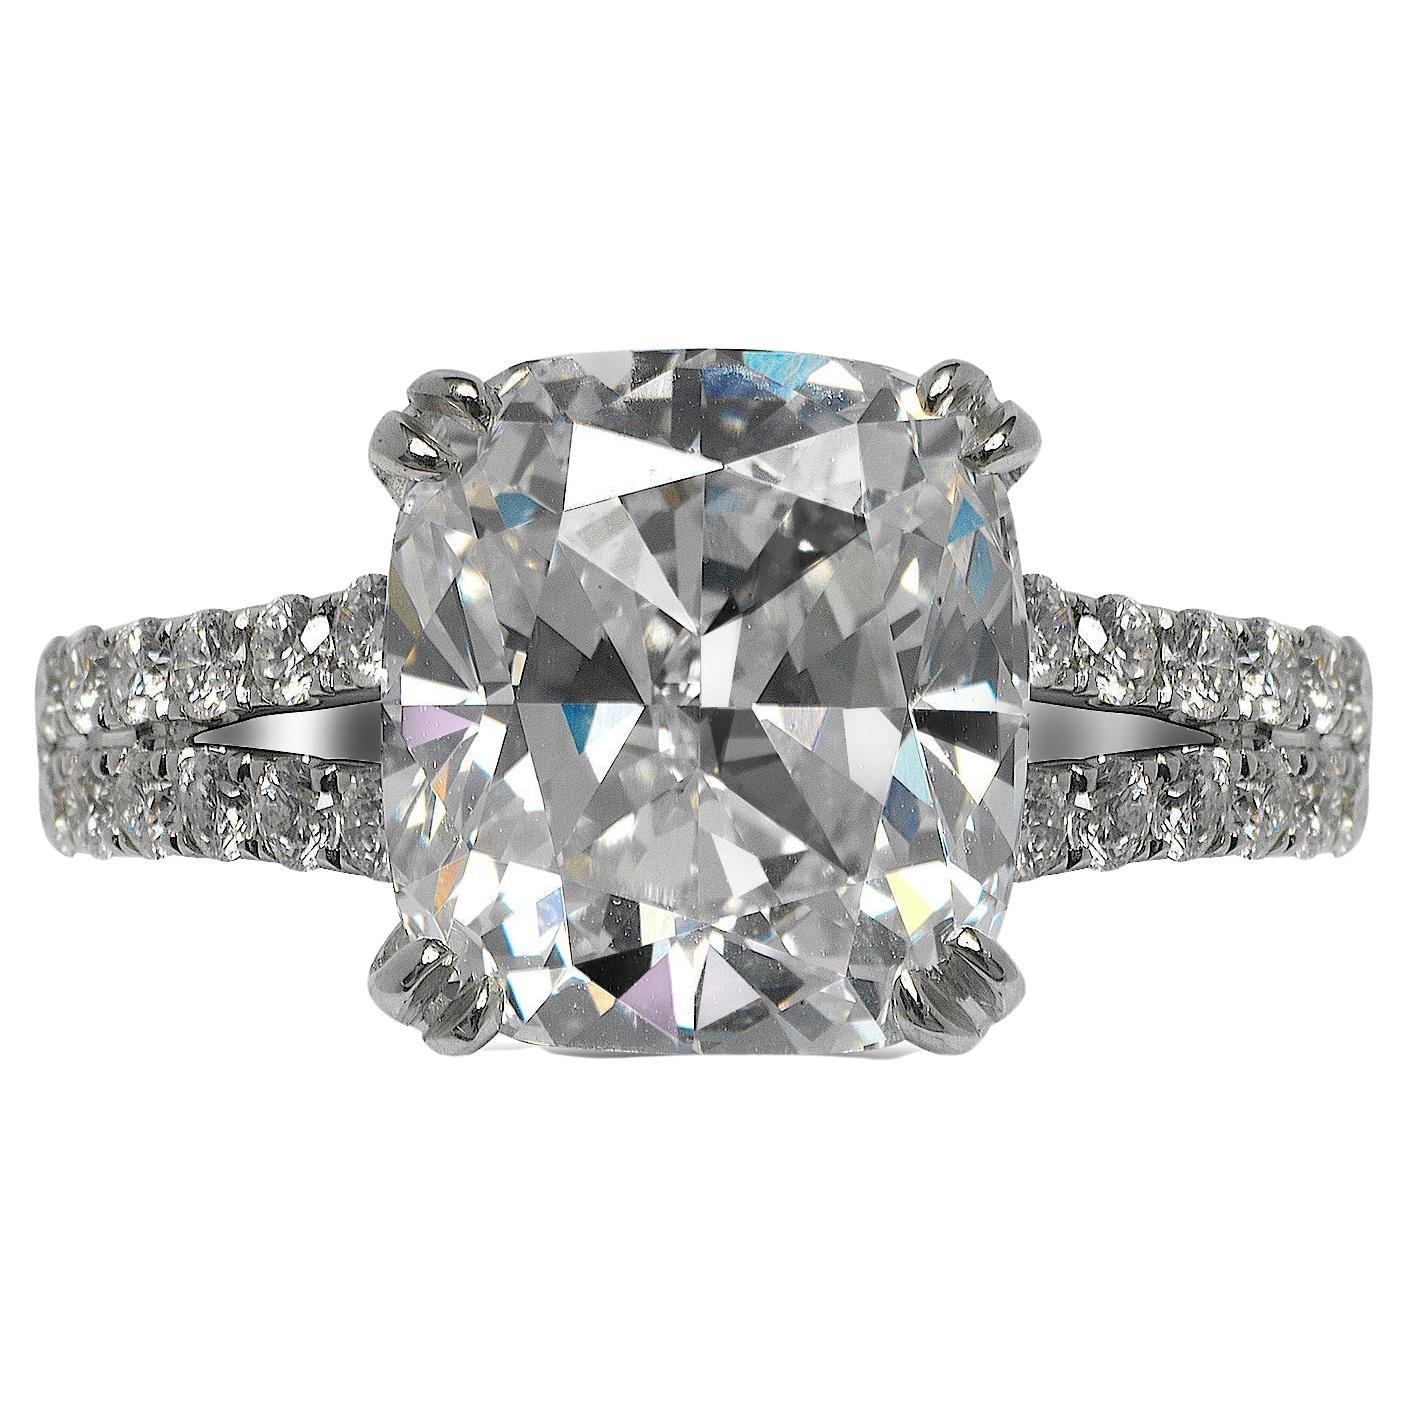 8 Carat Cushion Cut Diamond Engagement Ring GIA Certified F IF